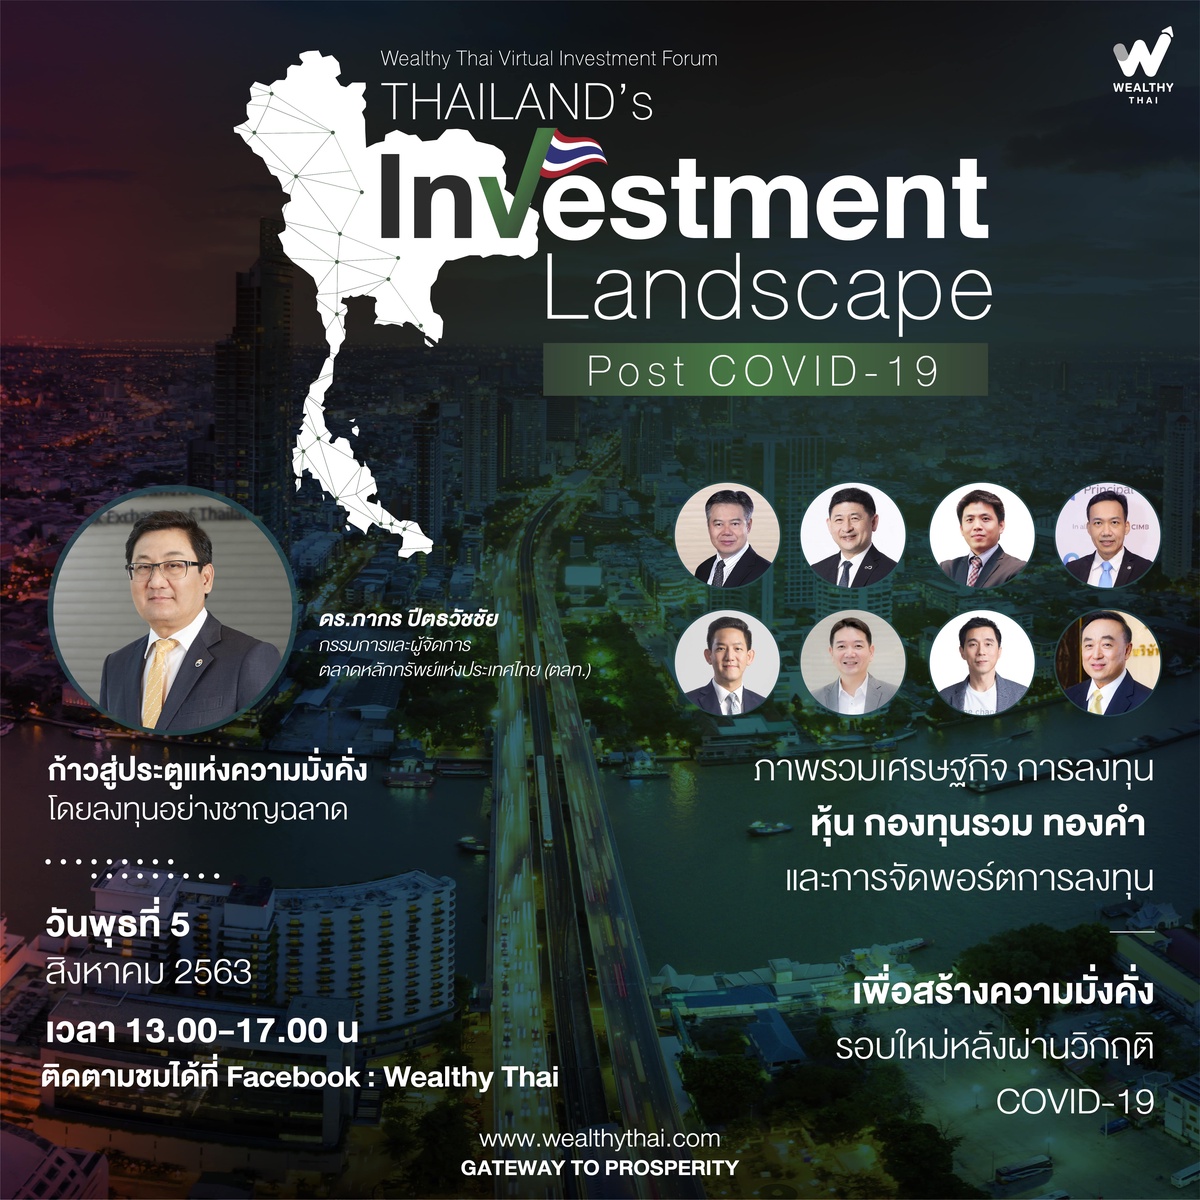 WEALTHY THAI ลุยจัดงาน Virtual Investment Forum หวังเป็นเกตเวย์สู่ความมั่งคั่งหลังวิกฤต COVID-19